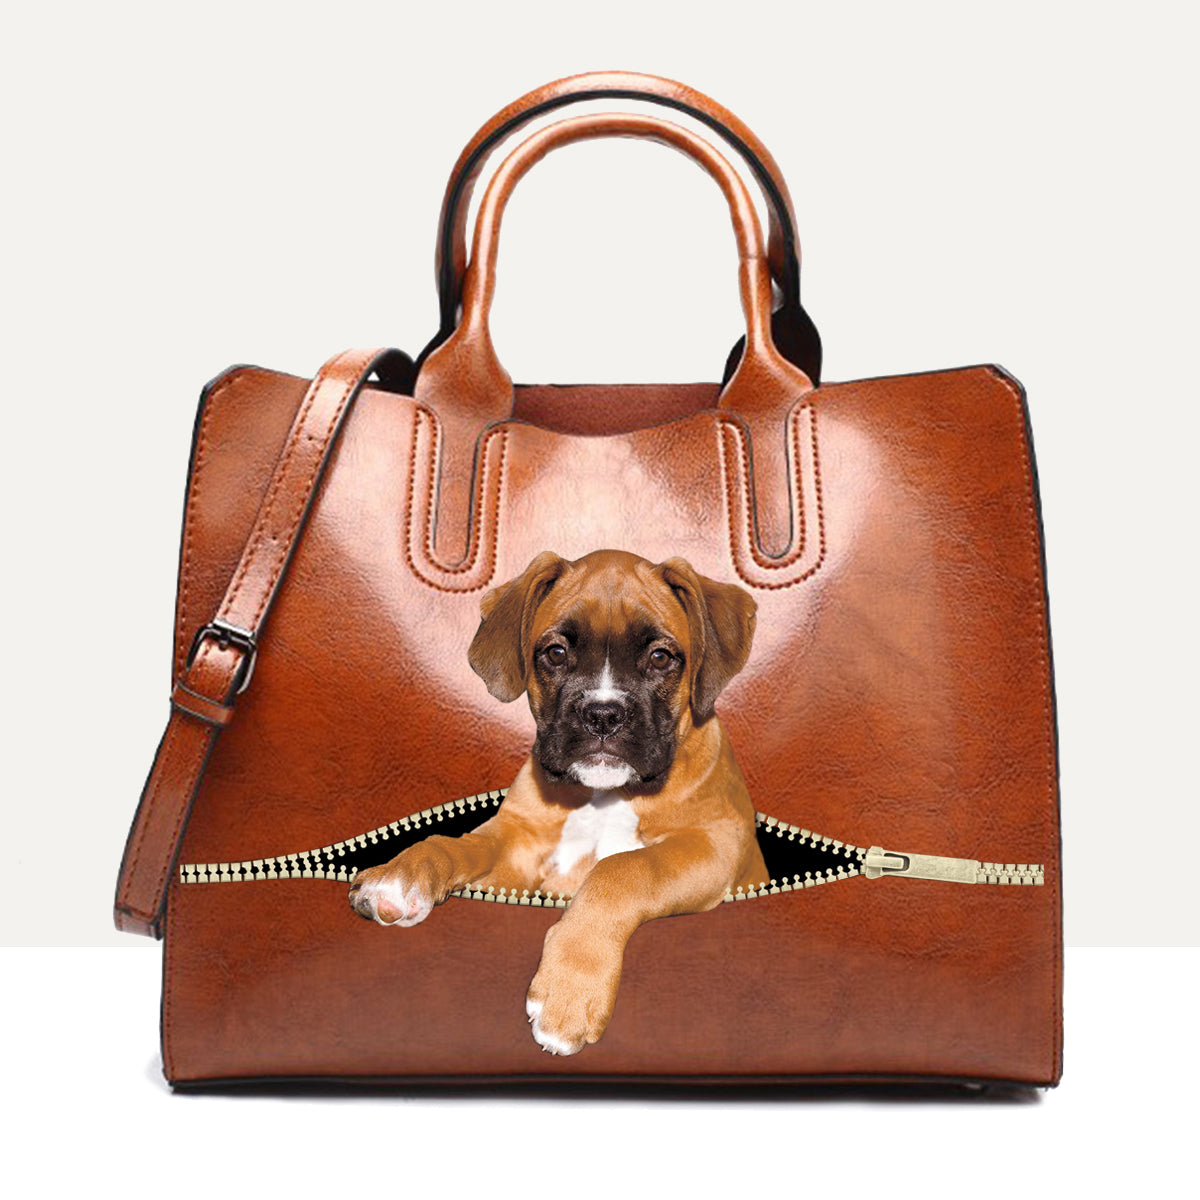 Your Best Companion - Boxer Dog Luxury Handbag V1